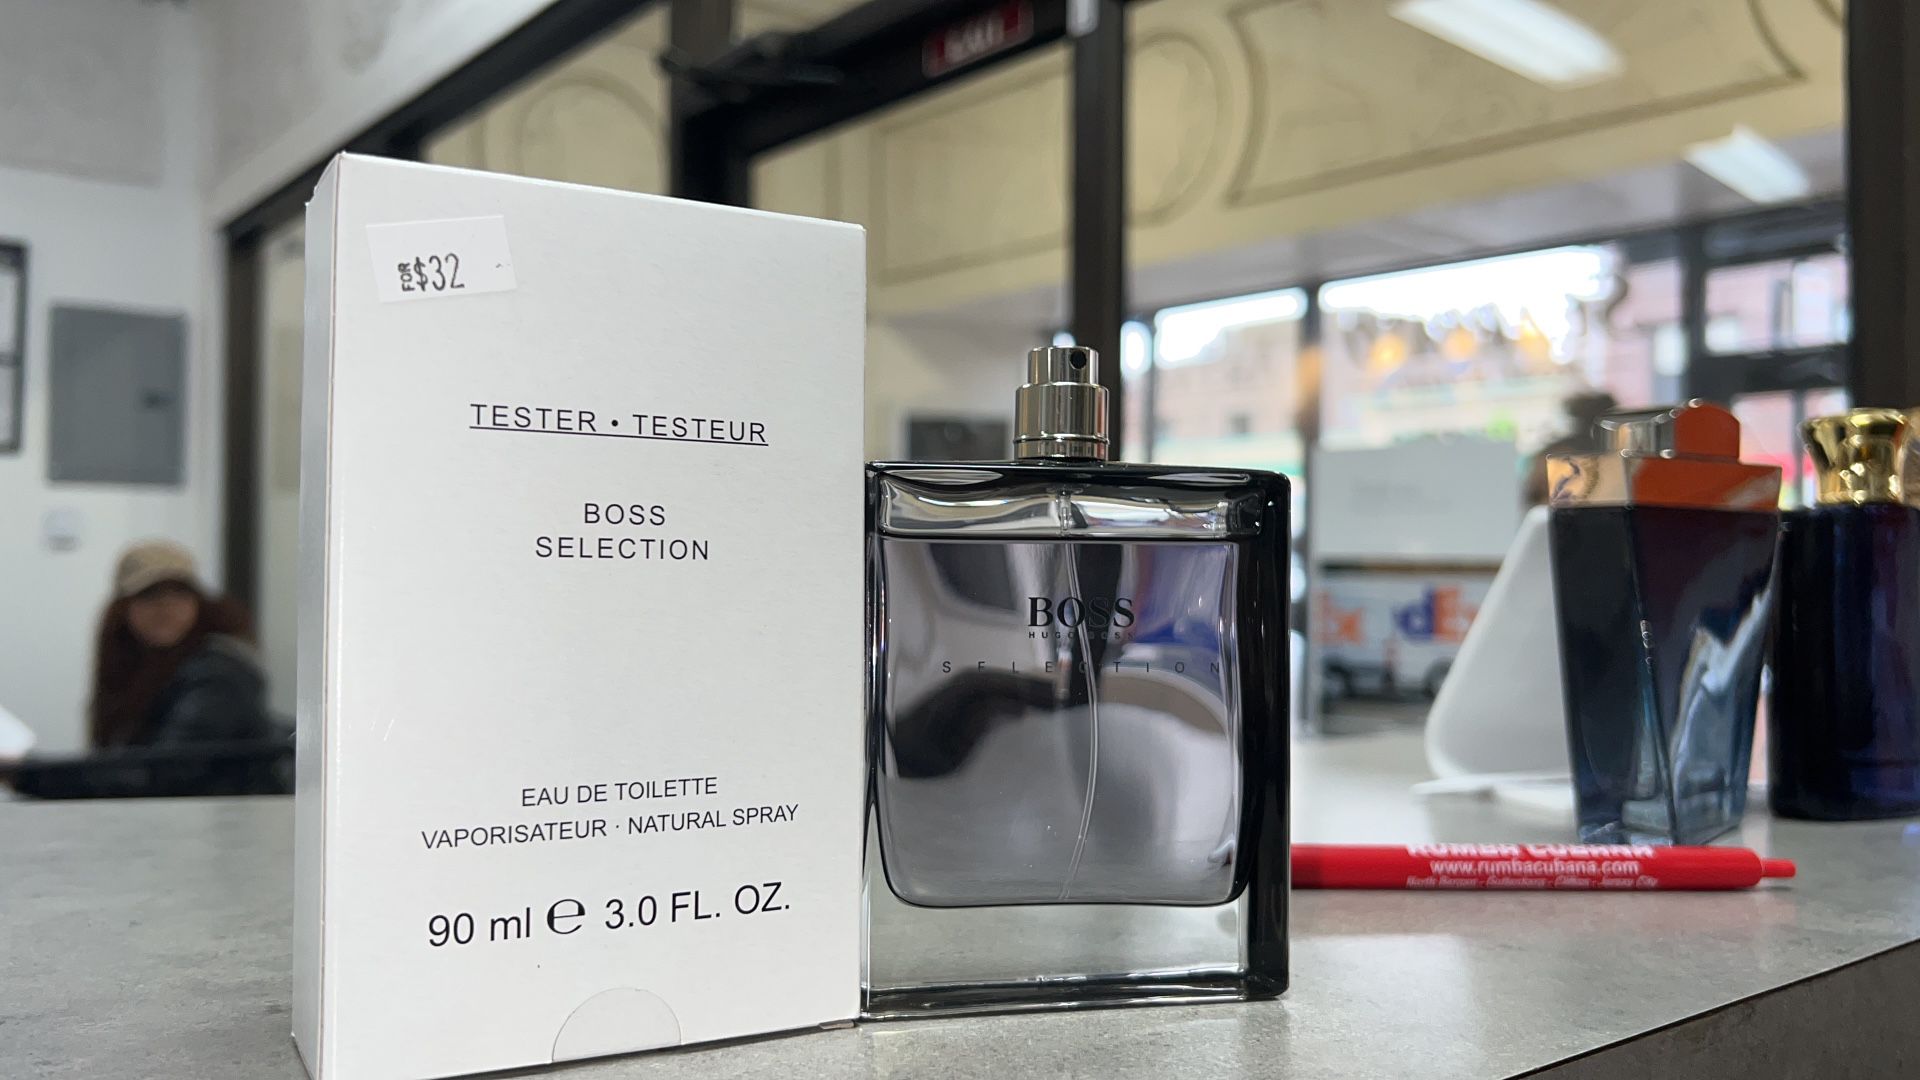 Chanel Allure Eau De Parfum 3.4 oz. Tester Spray (BRAND NEW W/ TESTER BOX) WOMEN FRAGRANCE PERFUME for Sale in Philadelphia, PA - OfferUp